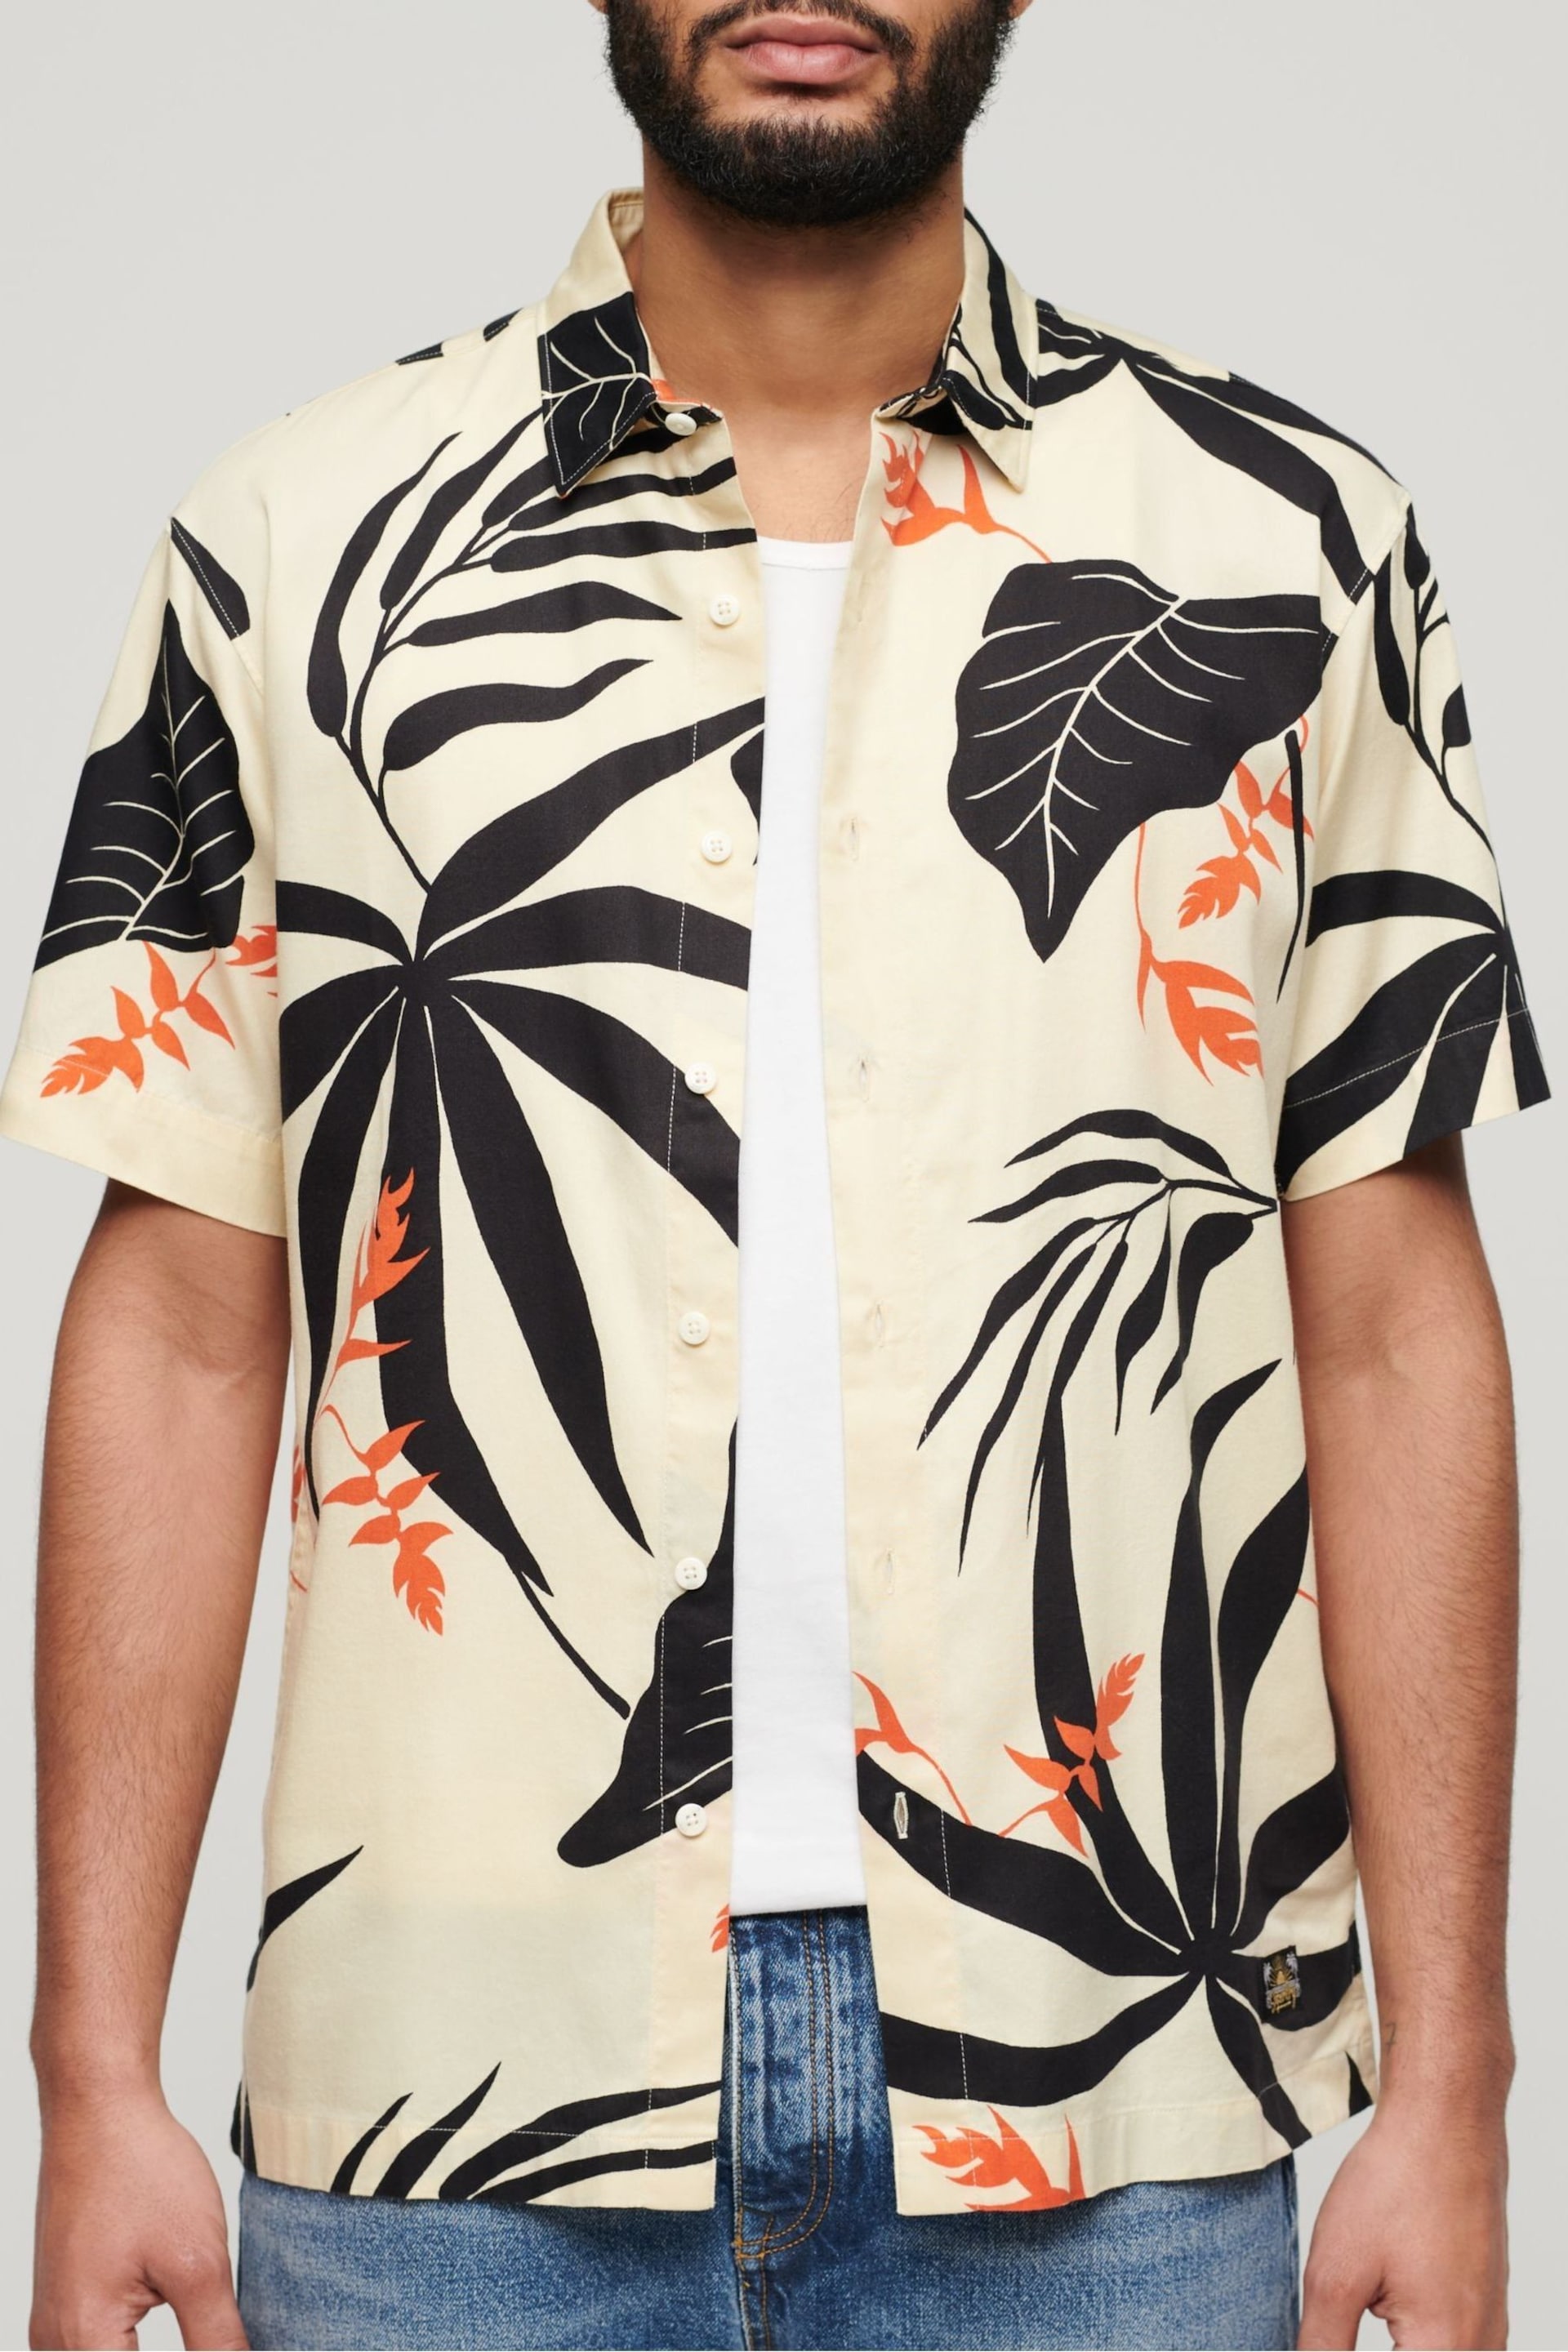 Superdry Cream Short Sleeve Hawaiian Printed Shirt - Image 4 of 7